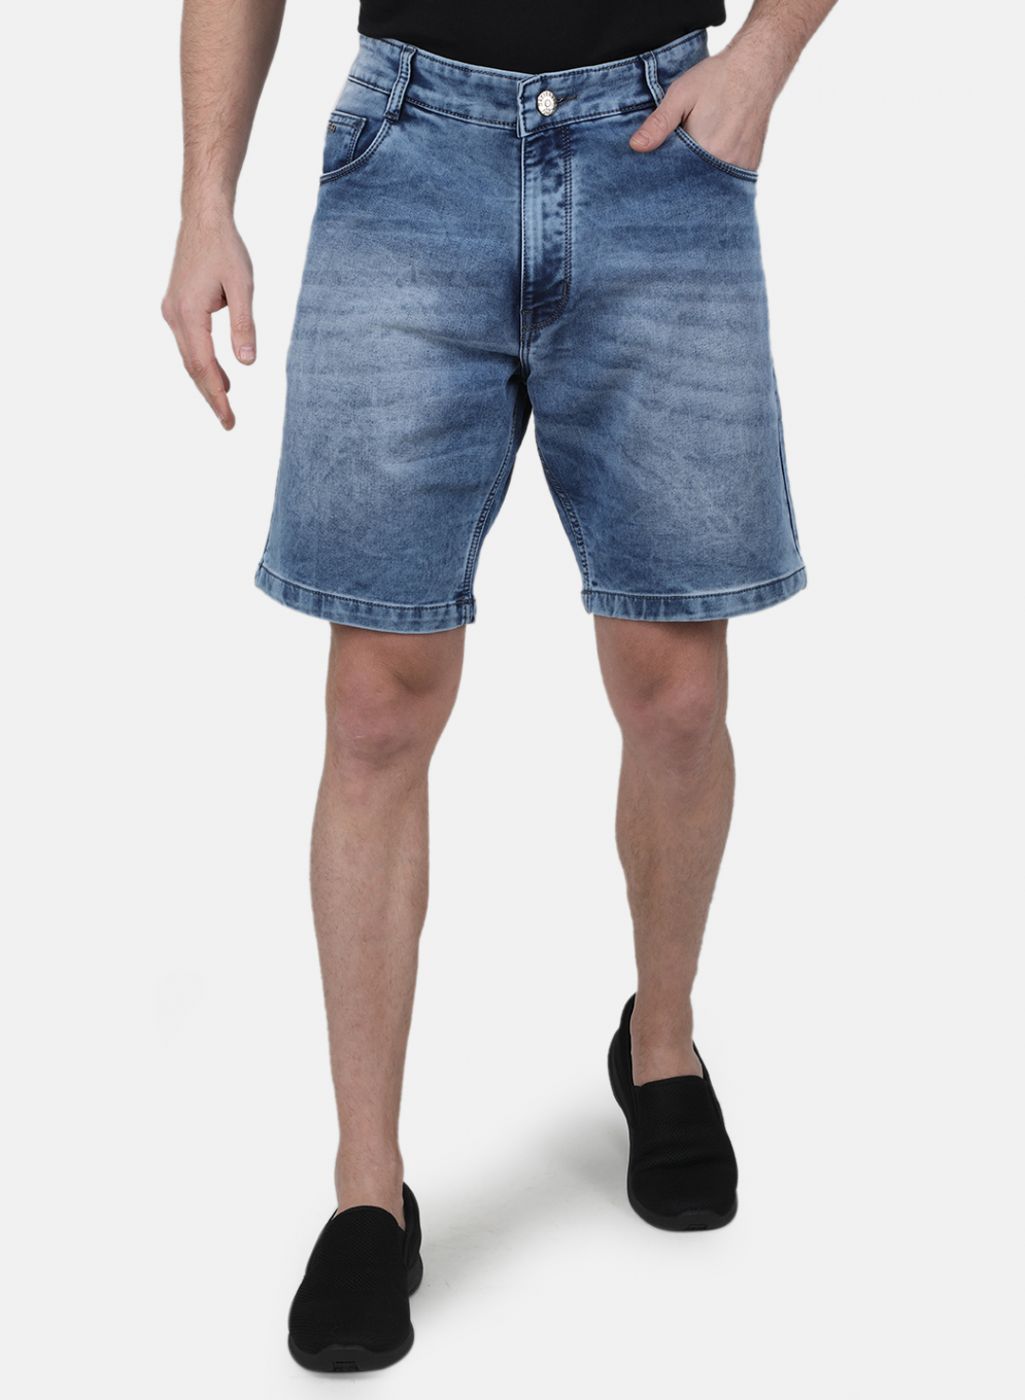 Men's Distressed Denim Shorts Half Pants Side Pocket Jeans Trousers Loose |  eBay